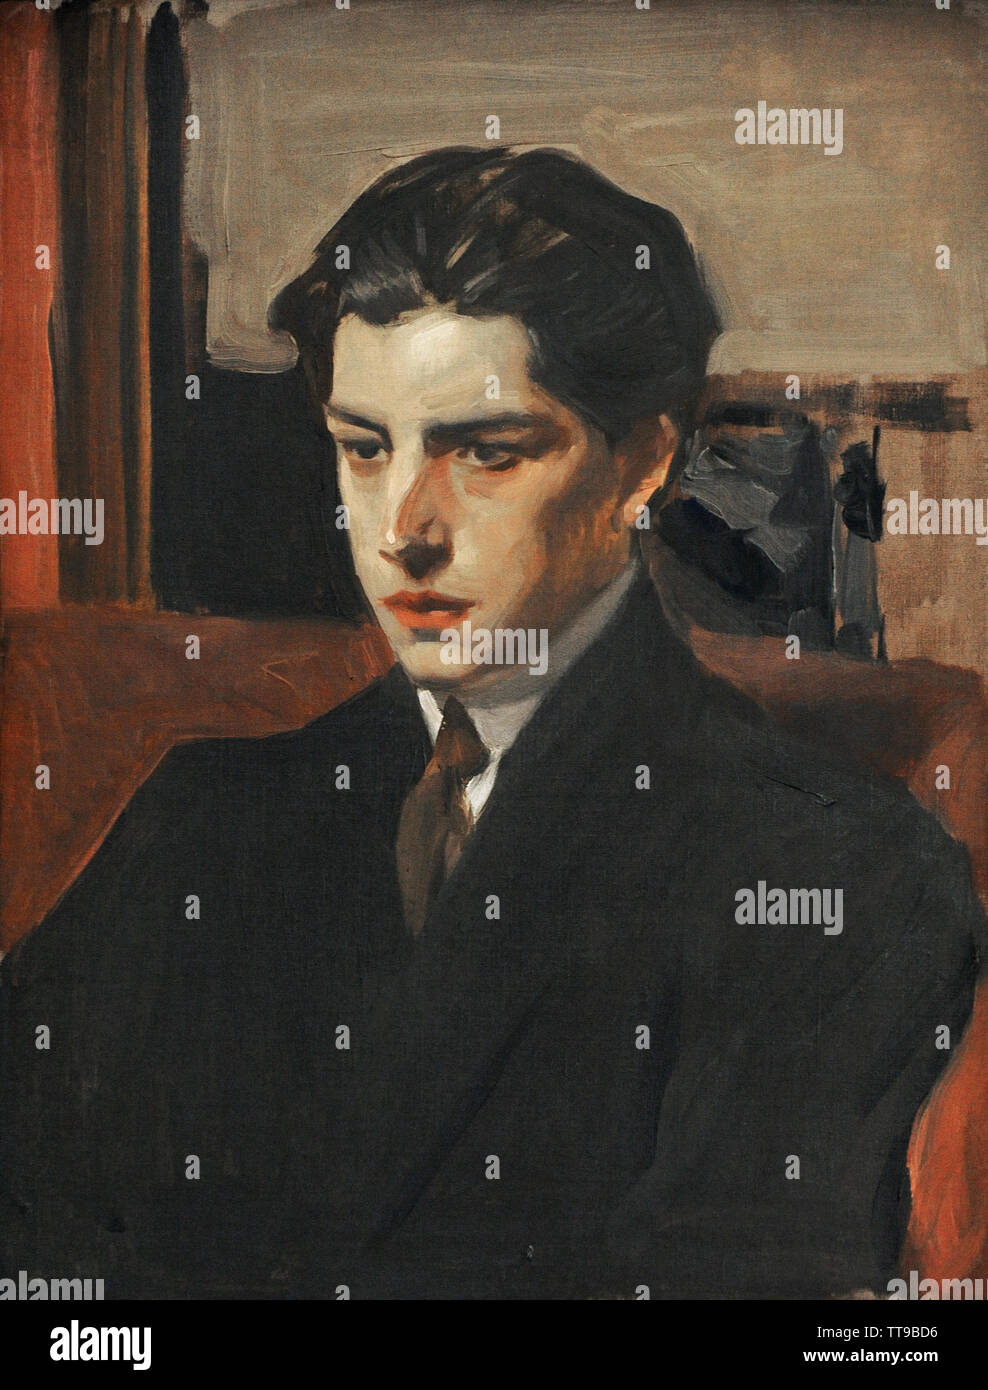 Joaquin Sorolla y Bastida (1863-1923). Spanish painter. Portrait of his son Joaquin Sorolla García (1892-1948) at 22 years old, 1914. Sorolla Museum. Madrid. Spain. Stock Photo